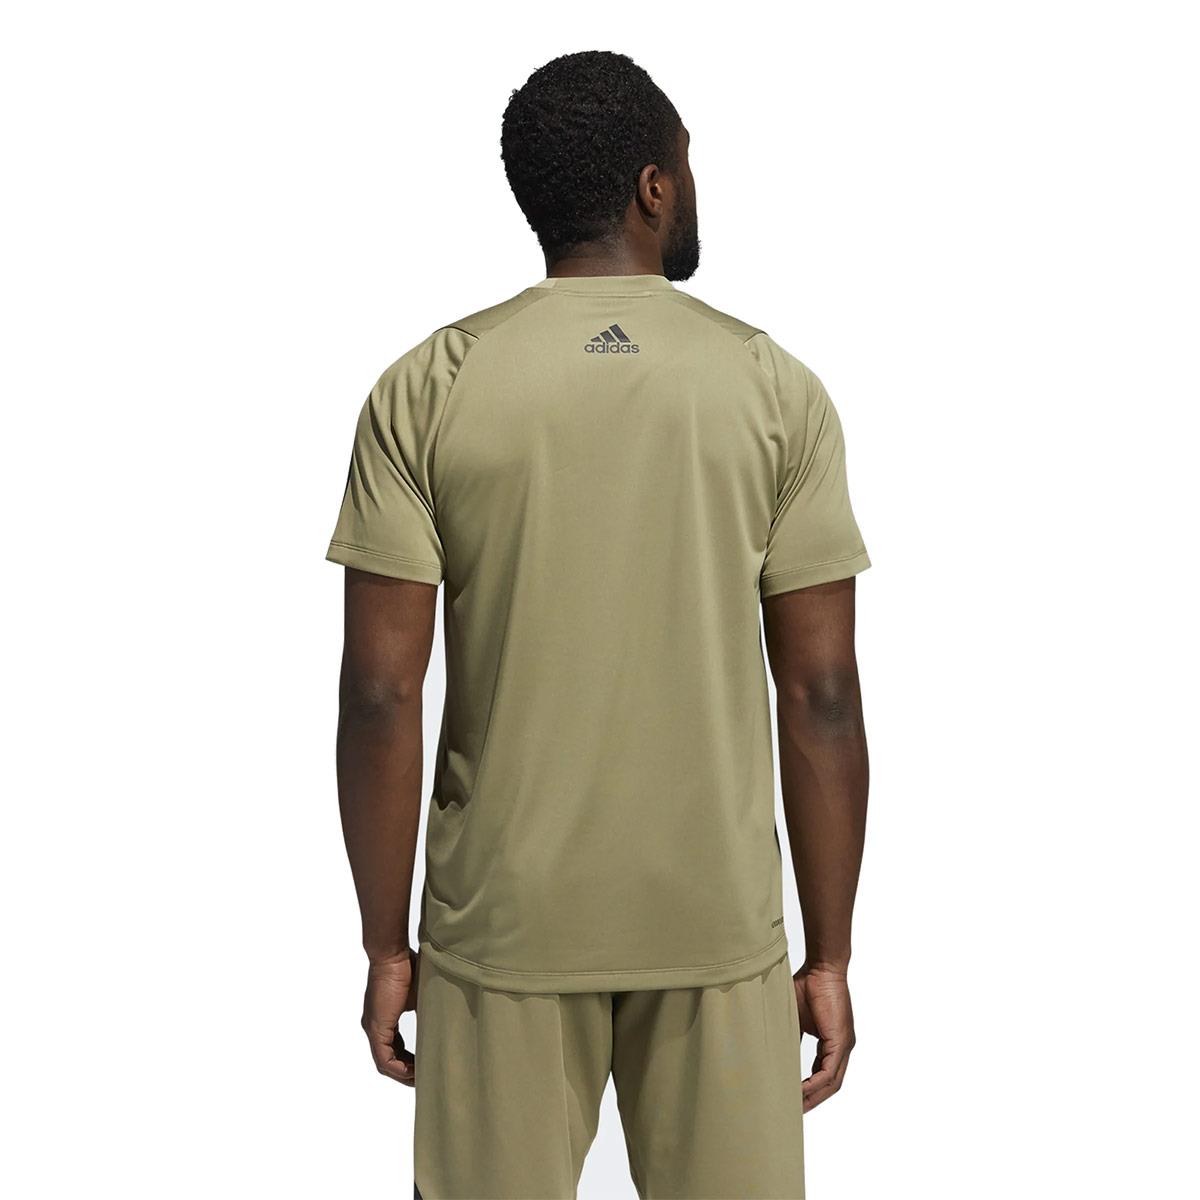 T-Shirt Adidas Freelift para Homens - Verde